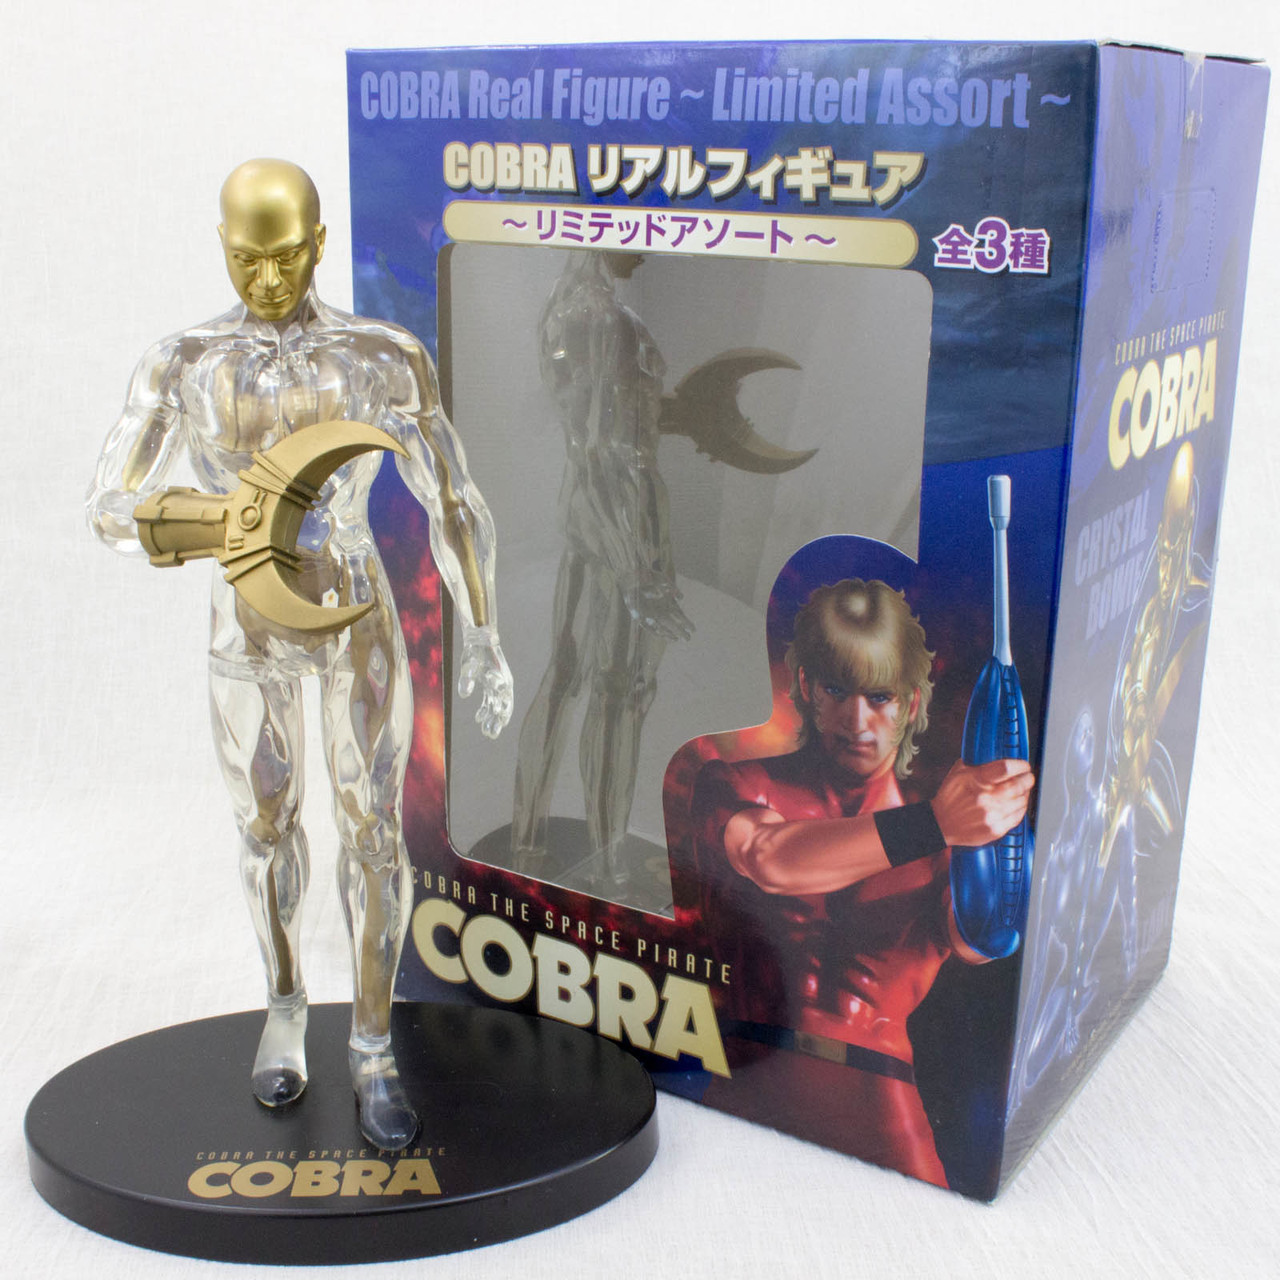 Space Adventure Cobra Crystal Bowie Real Figure Limited Assort Japan Anime Manga 9524